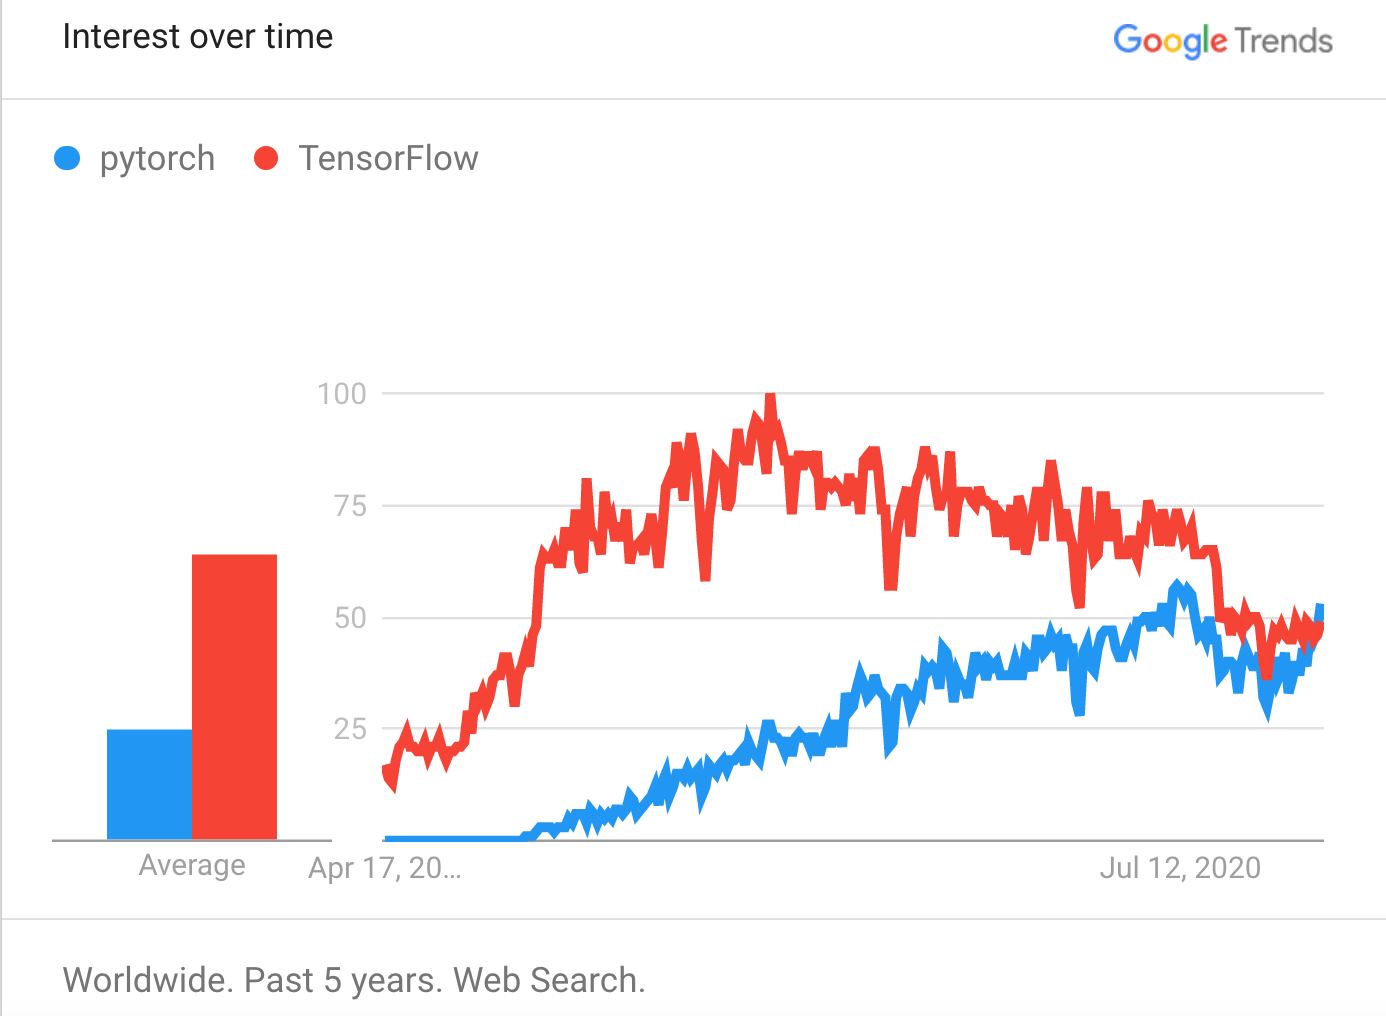 PyTorch vs TensorFlow Popularity